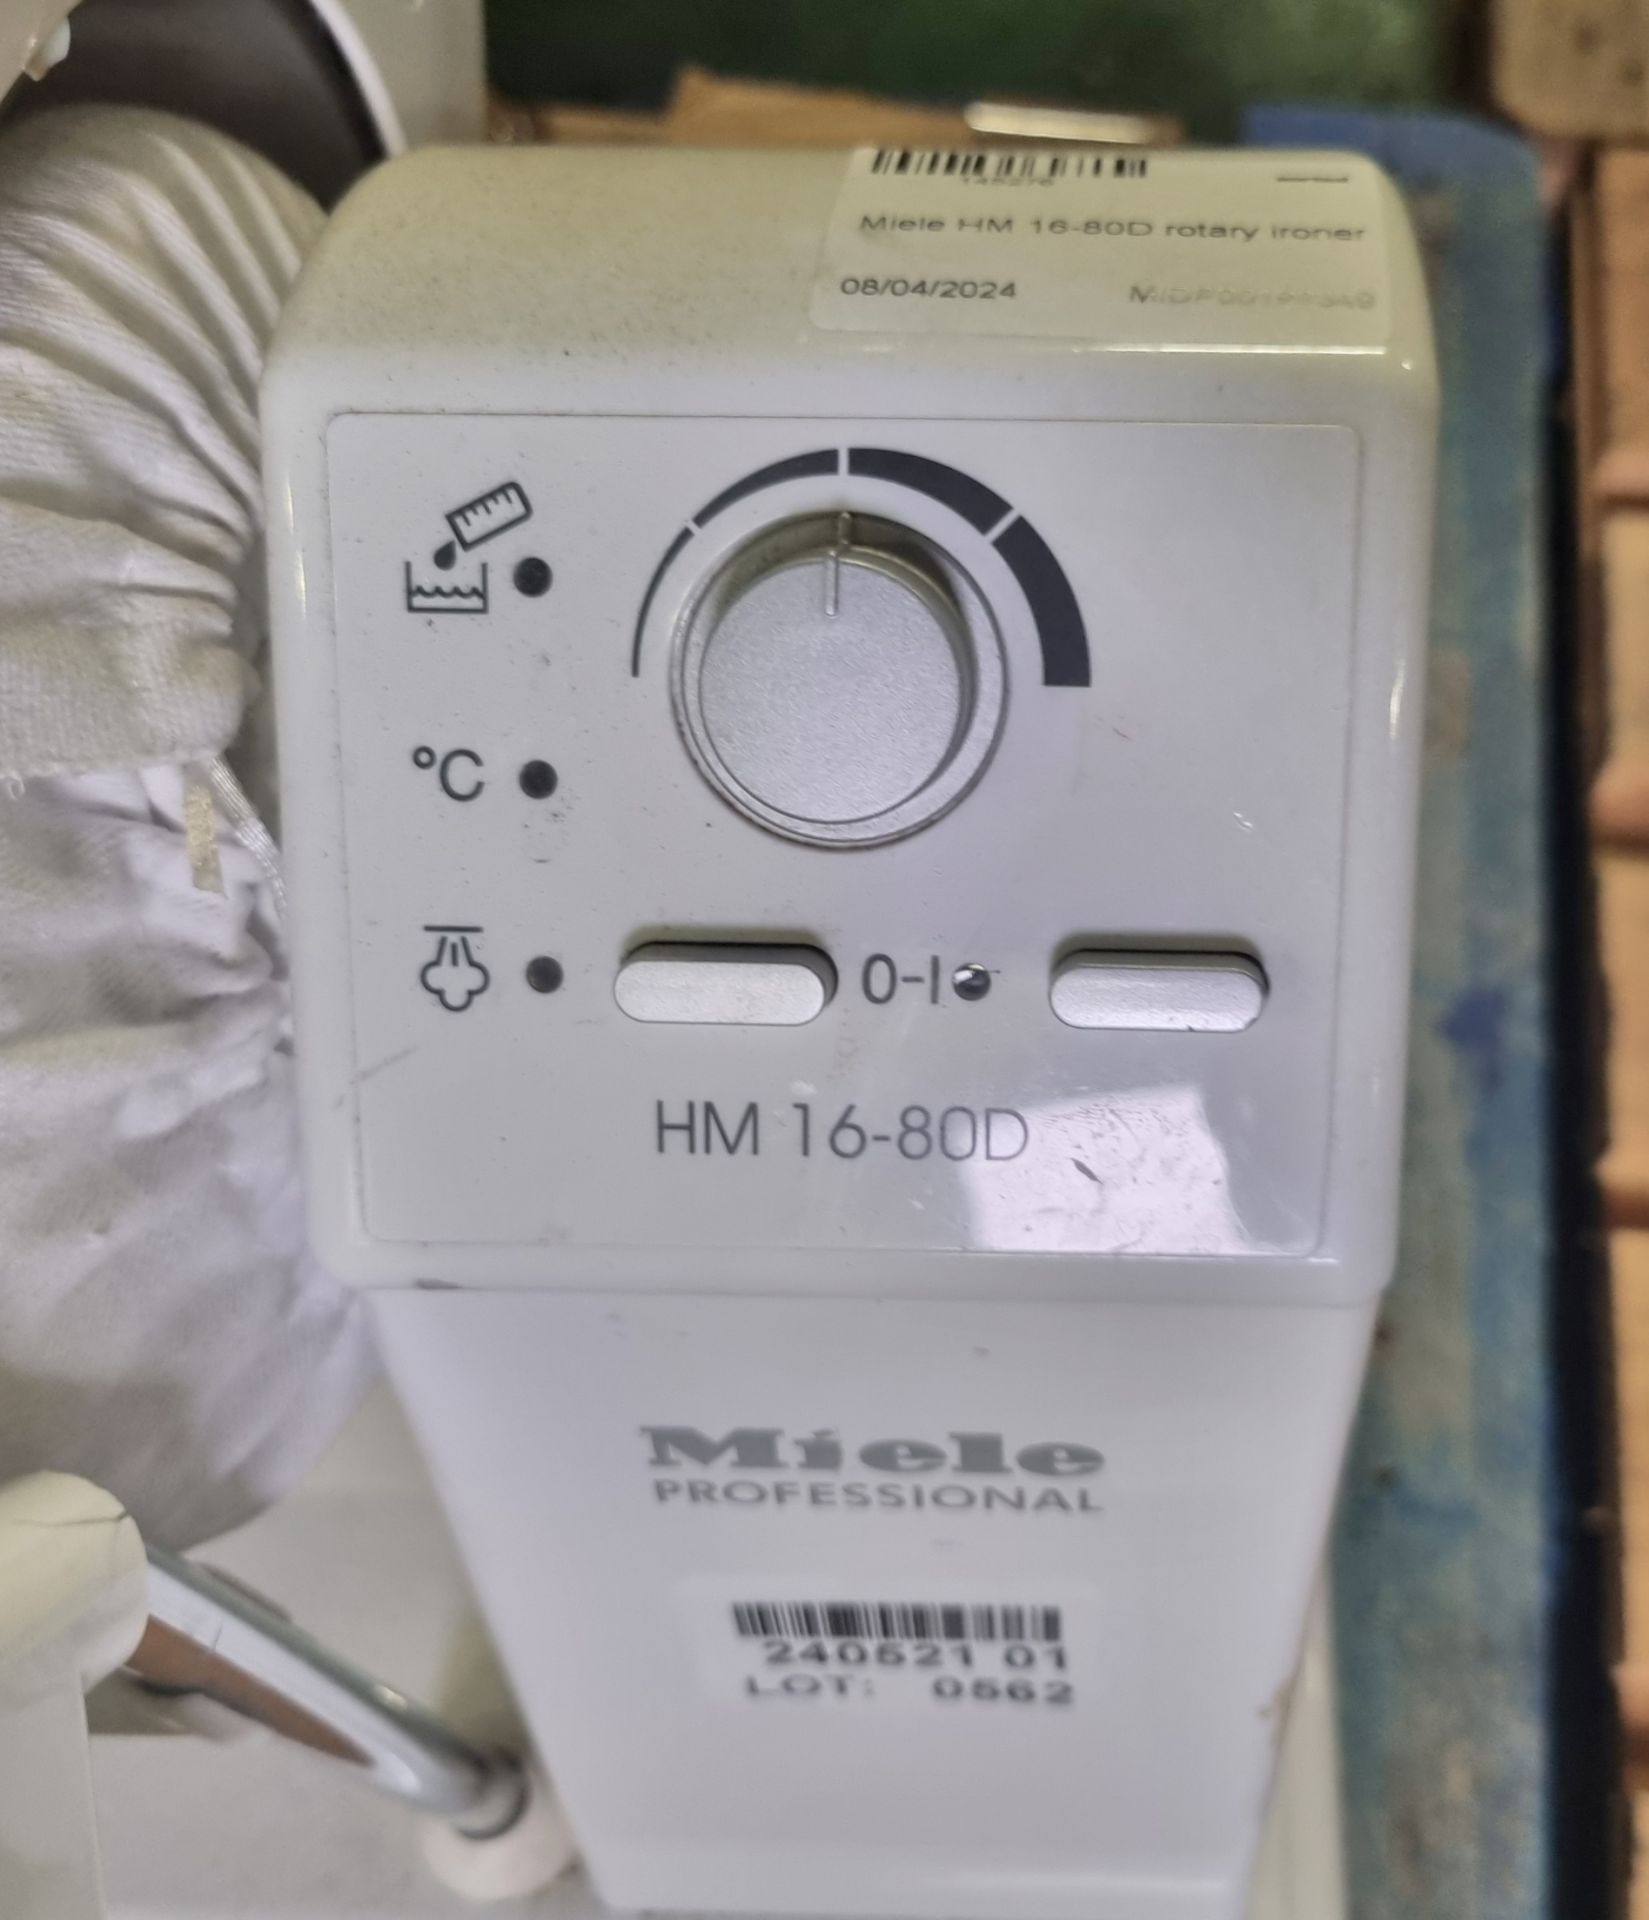 Miele HM 16-80D rotary ironer - Bild 6 aus 6